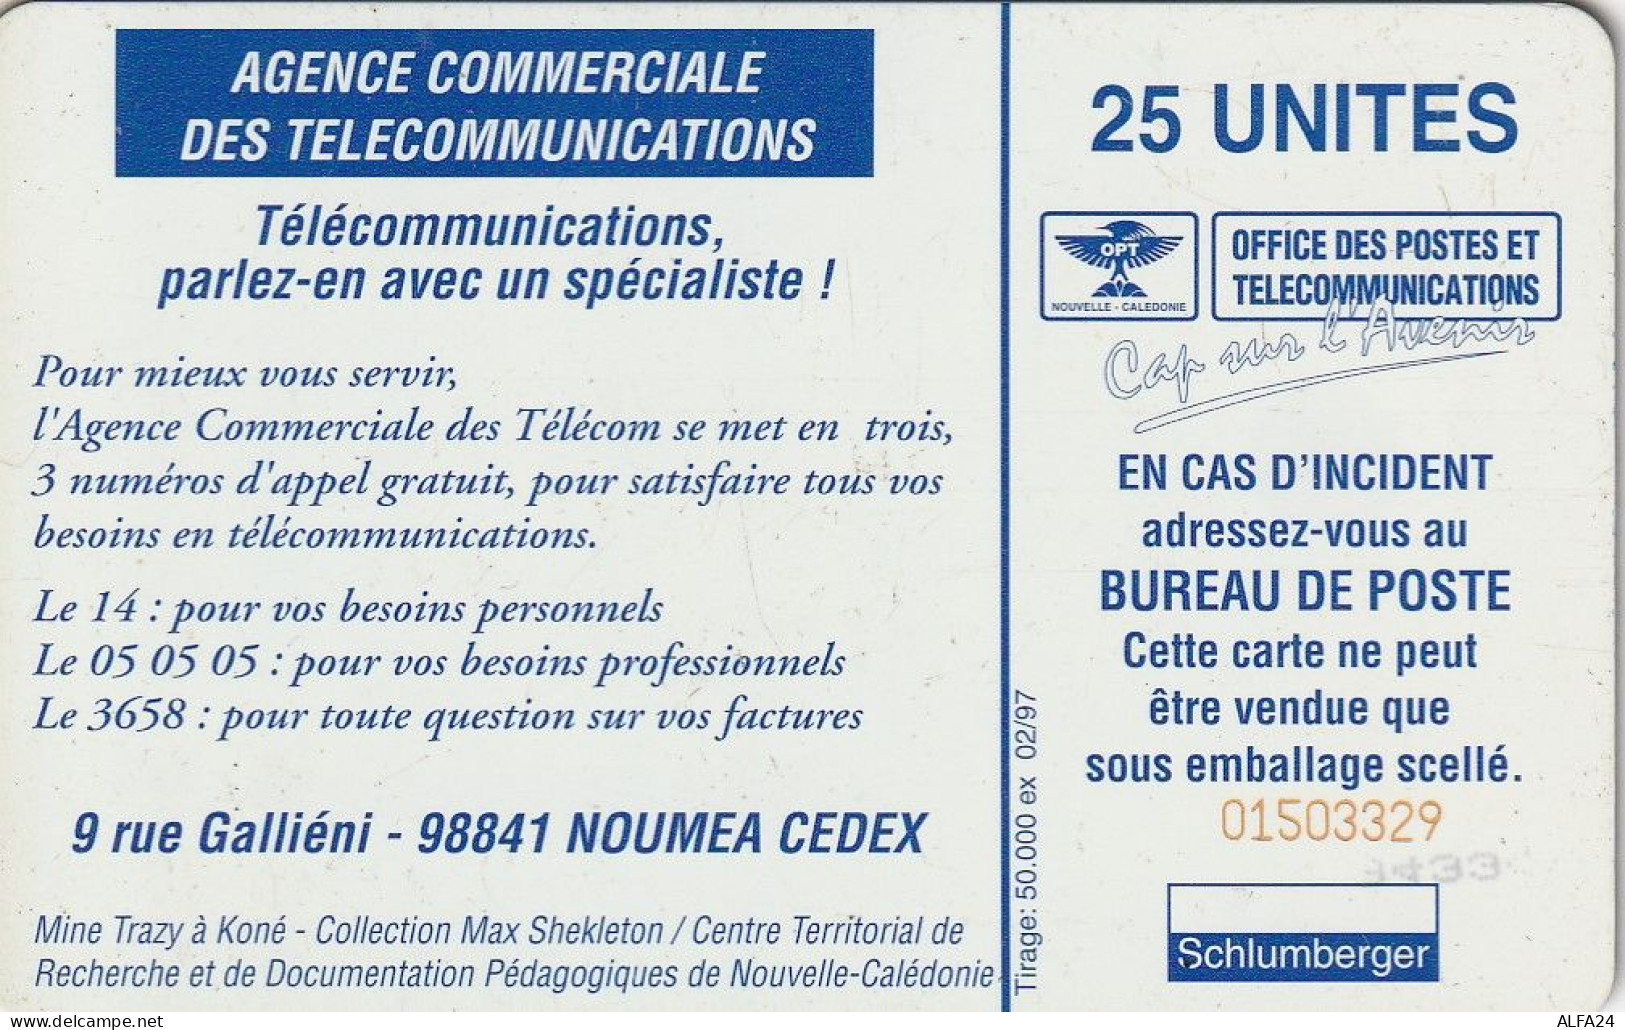 PHONE CARD NUOVA CALEDONIA  (E73.36.5 - Neukaledonien